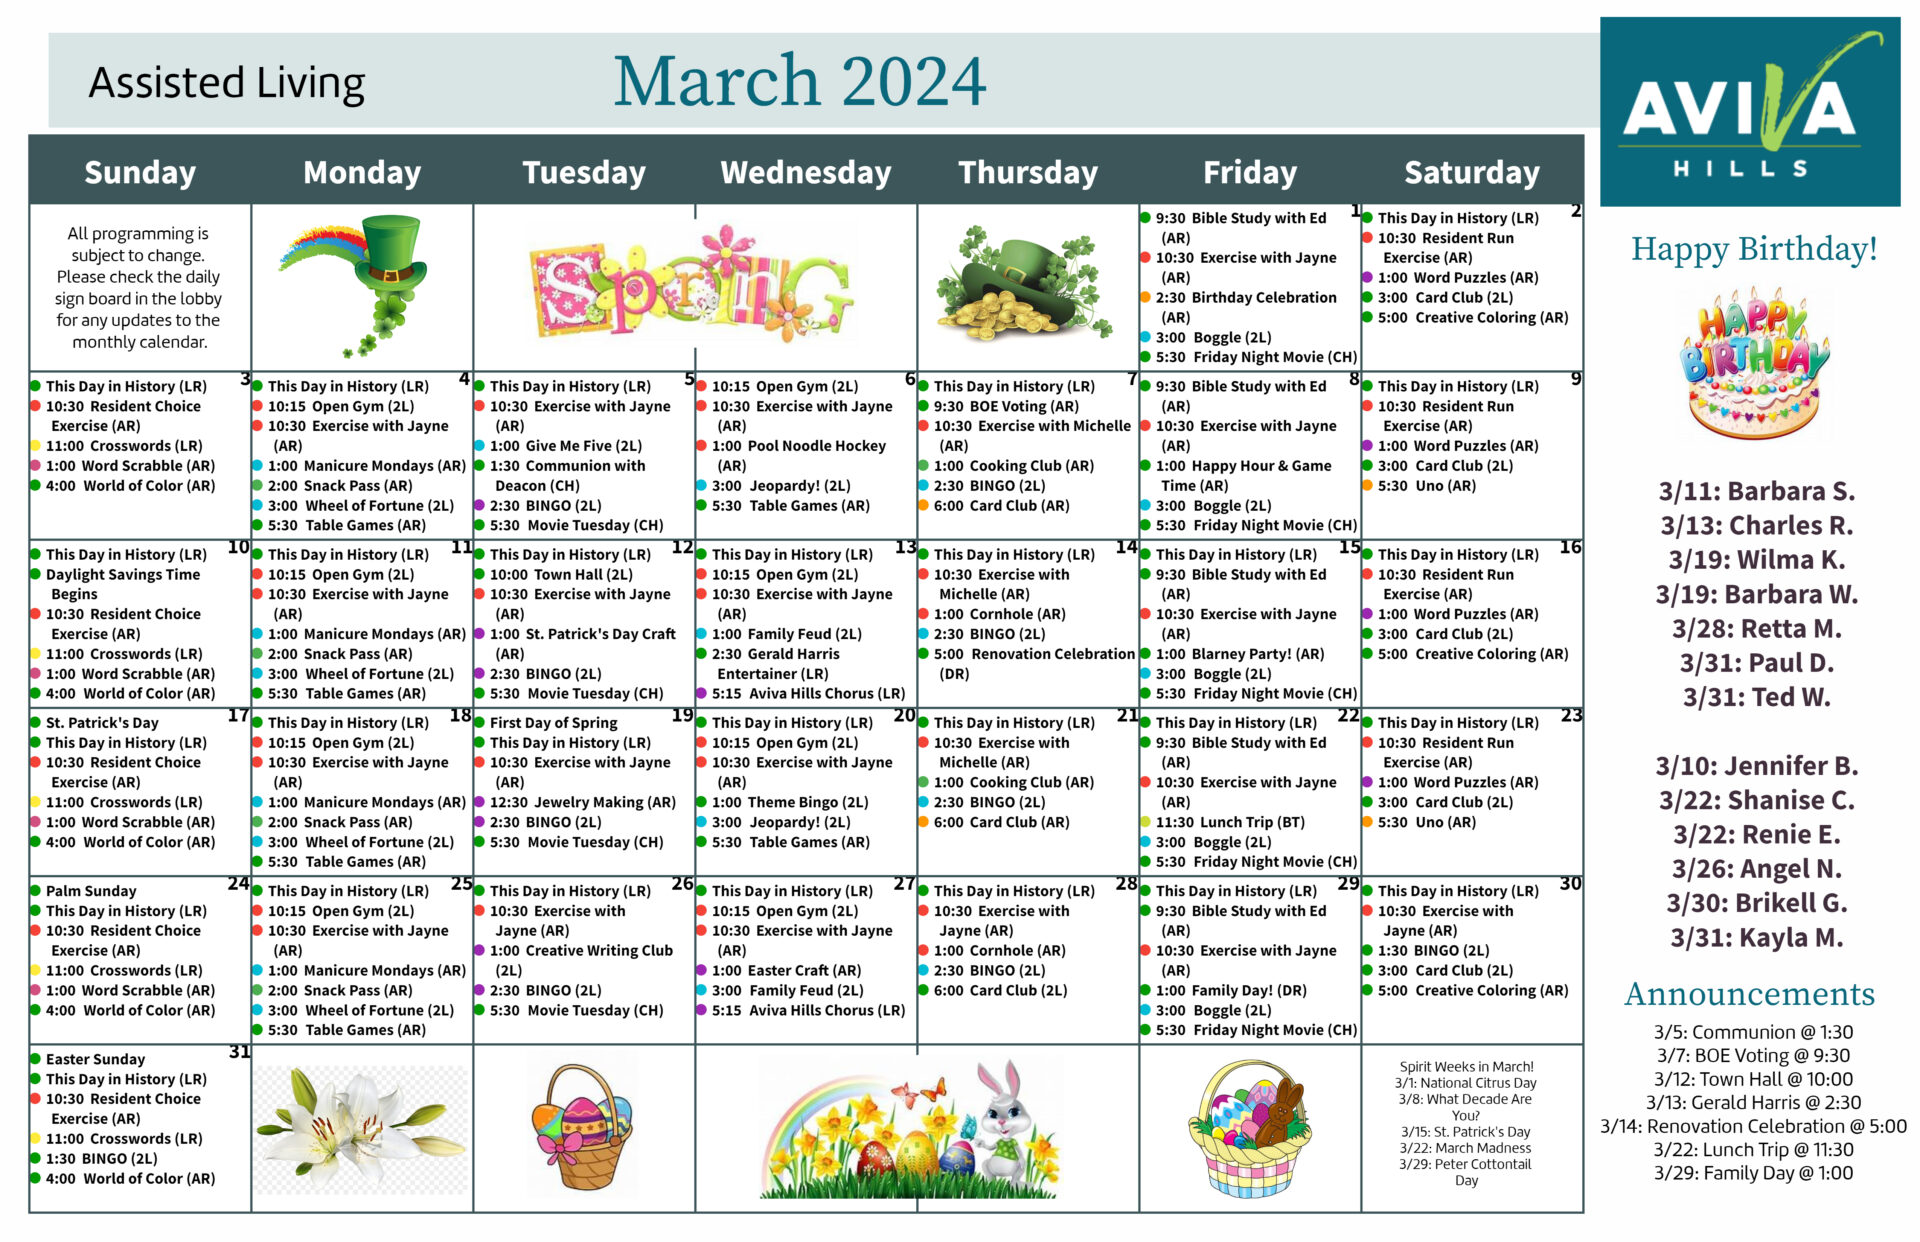 Aviva Hills Assisted Living March 2024 Event Calendar